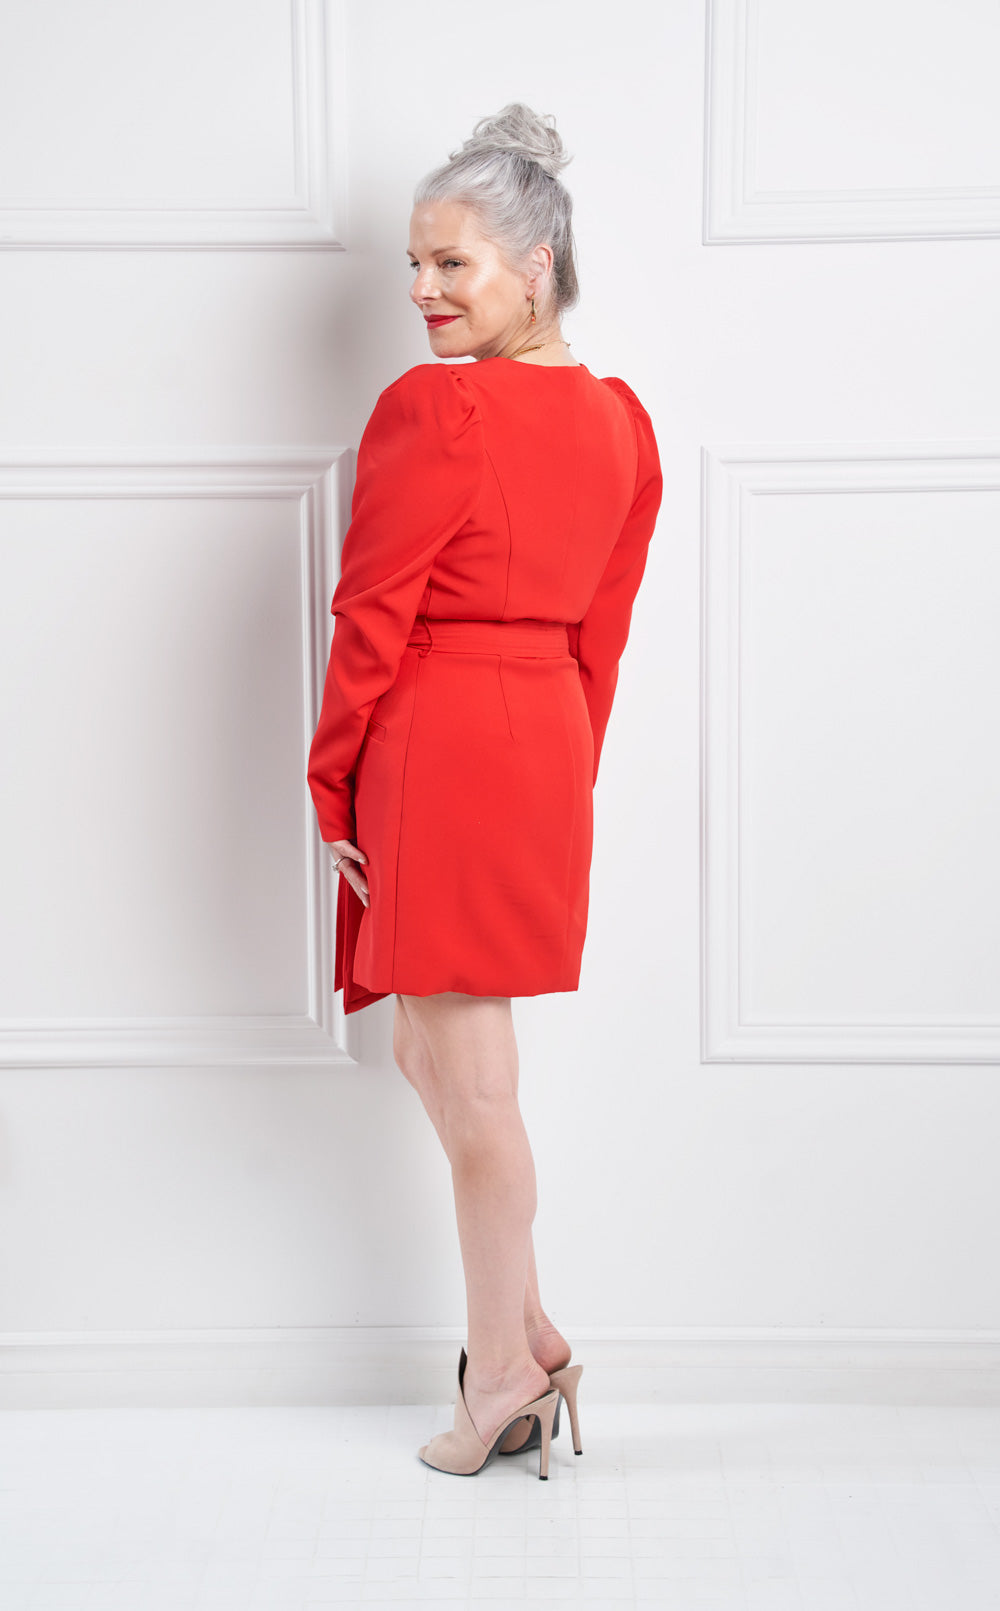 Short Red Dress - Rental 